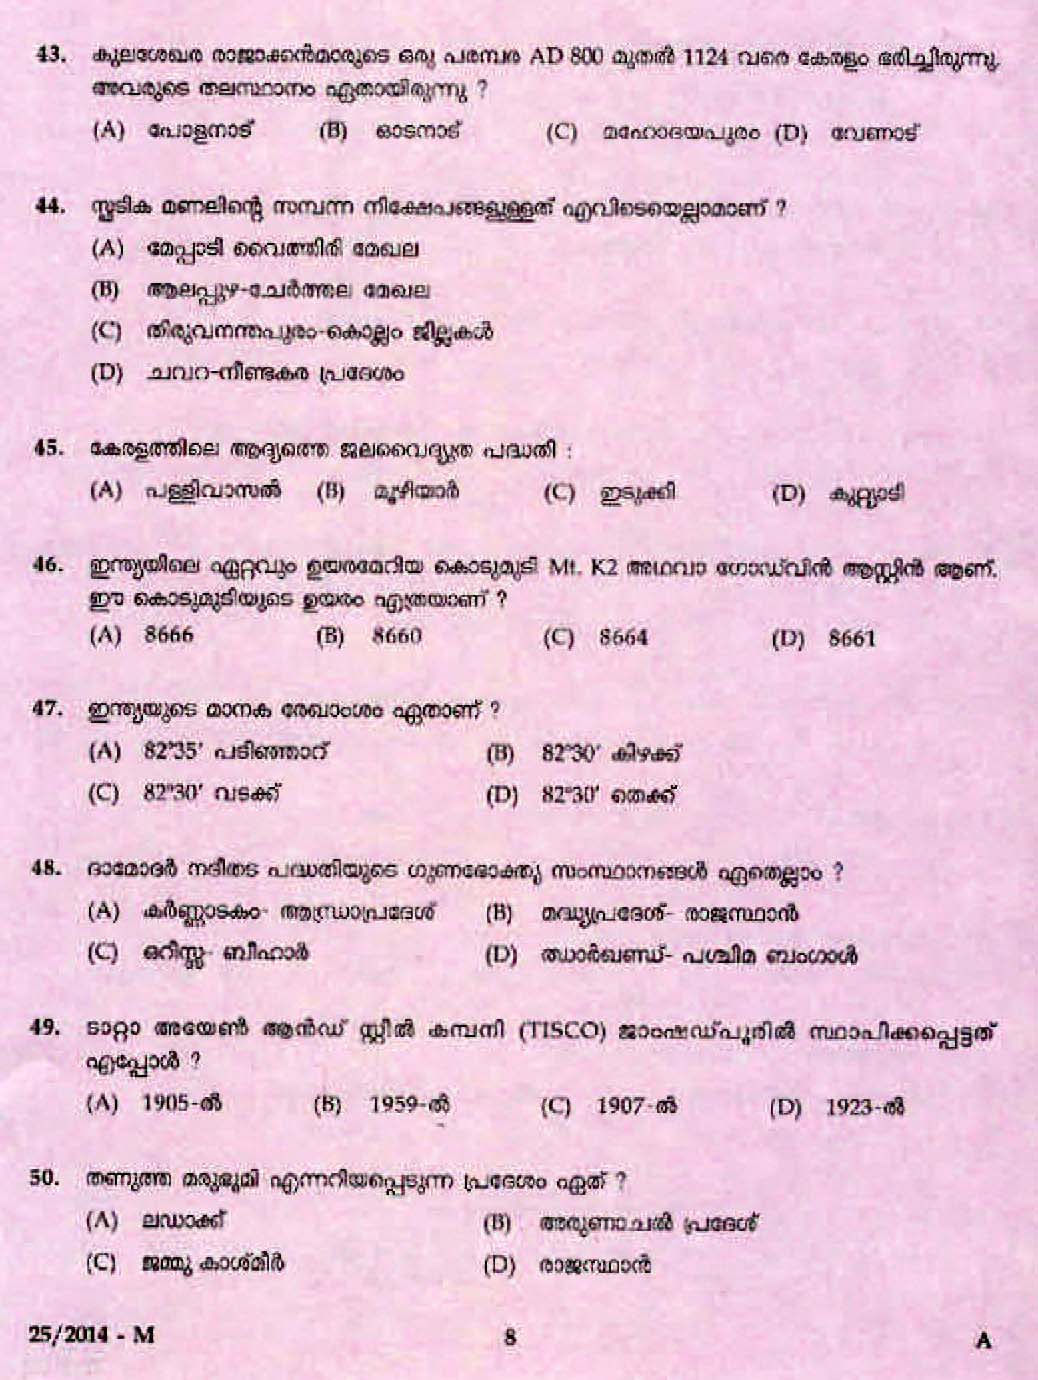 LD Clerk Idukki Question Paper Malayalam 2014 Paper Code 252014 M 4